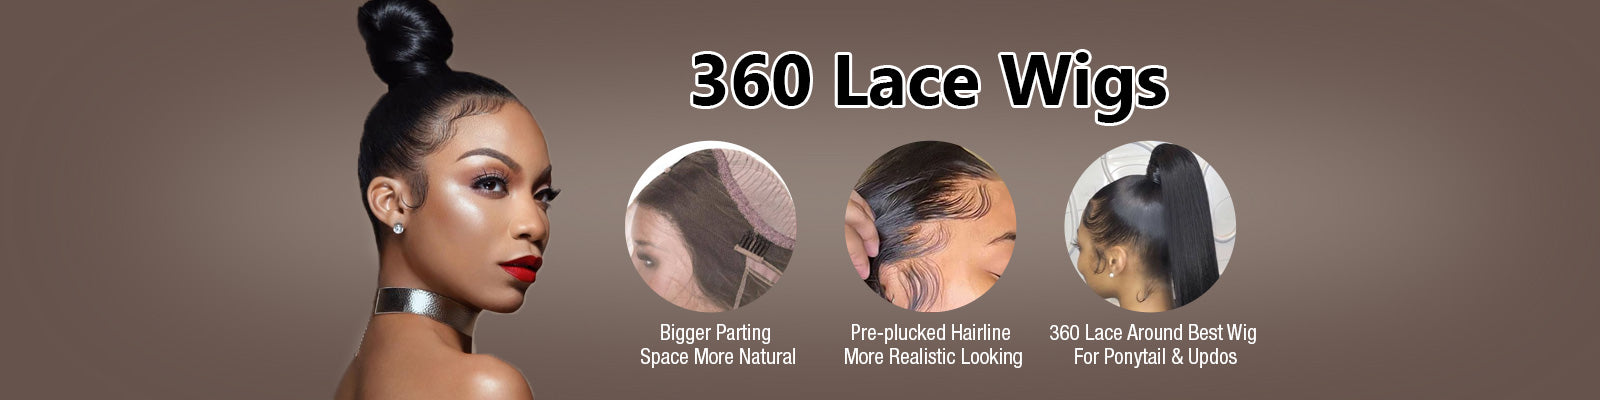 360 Lace Wigs